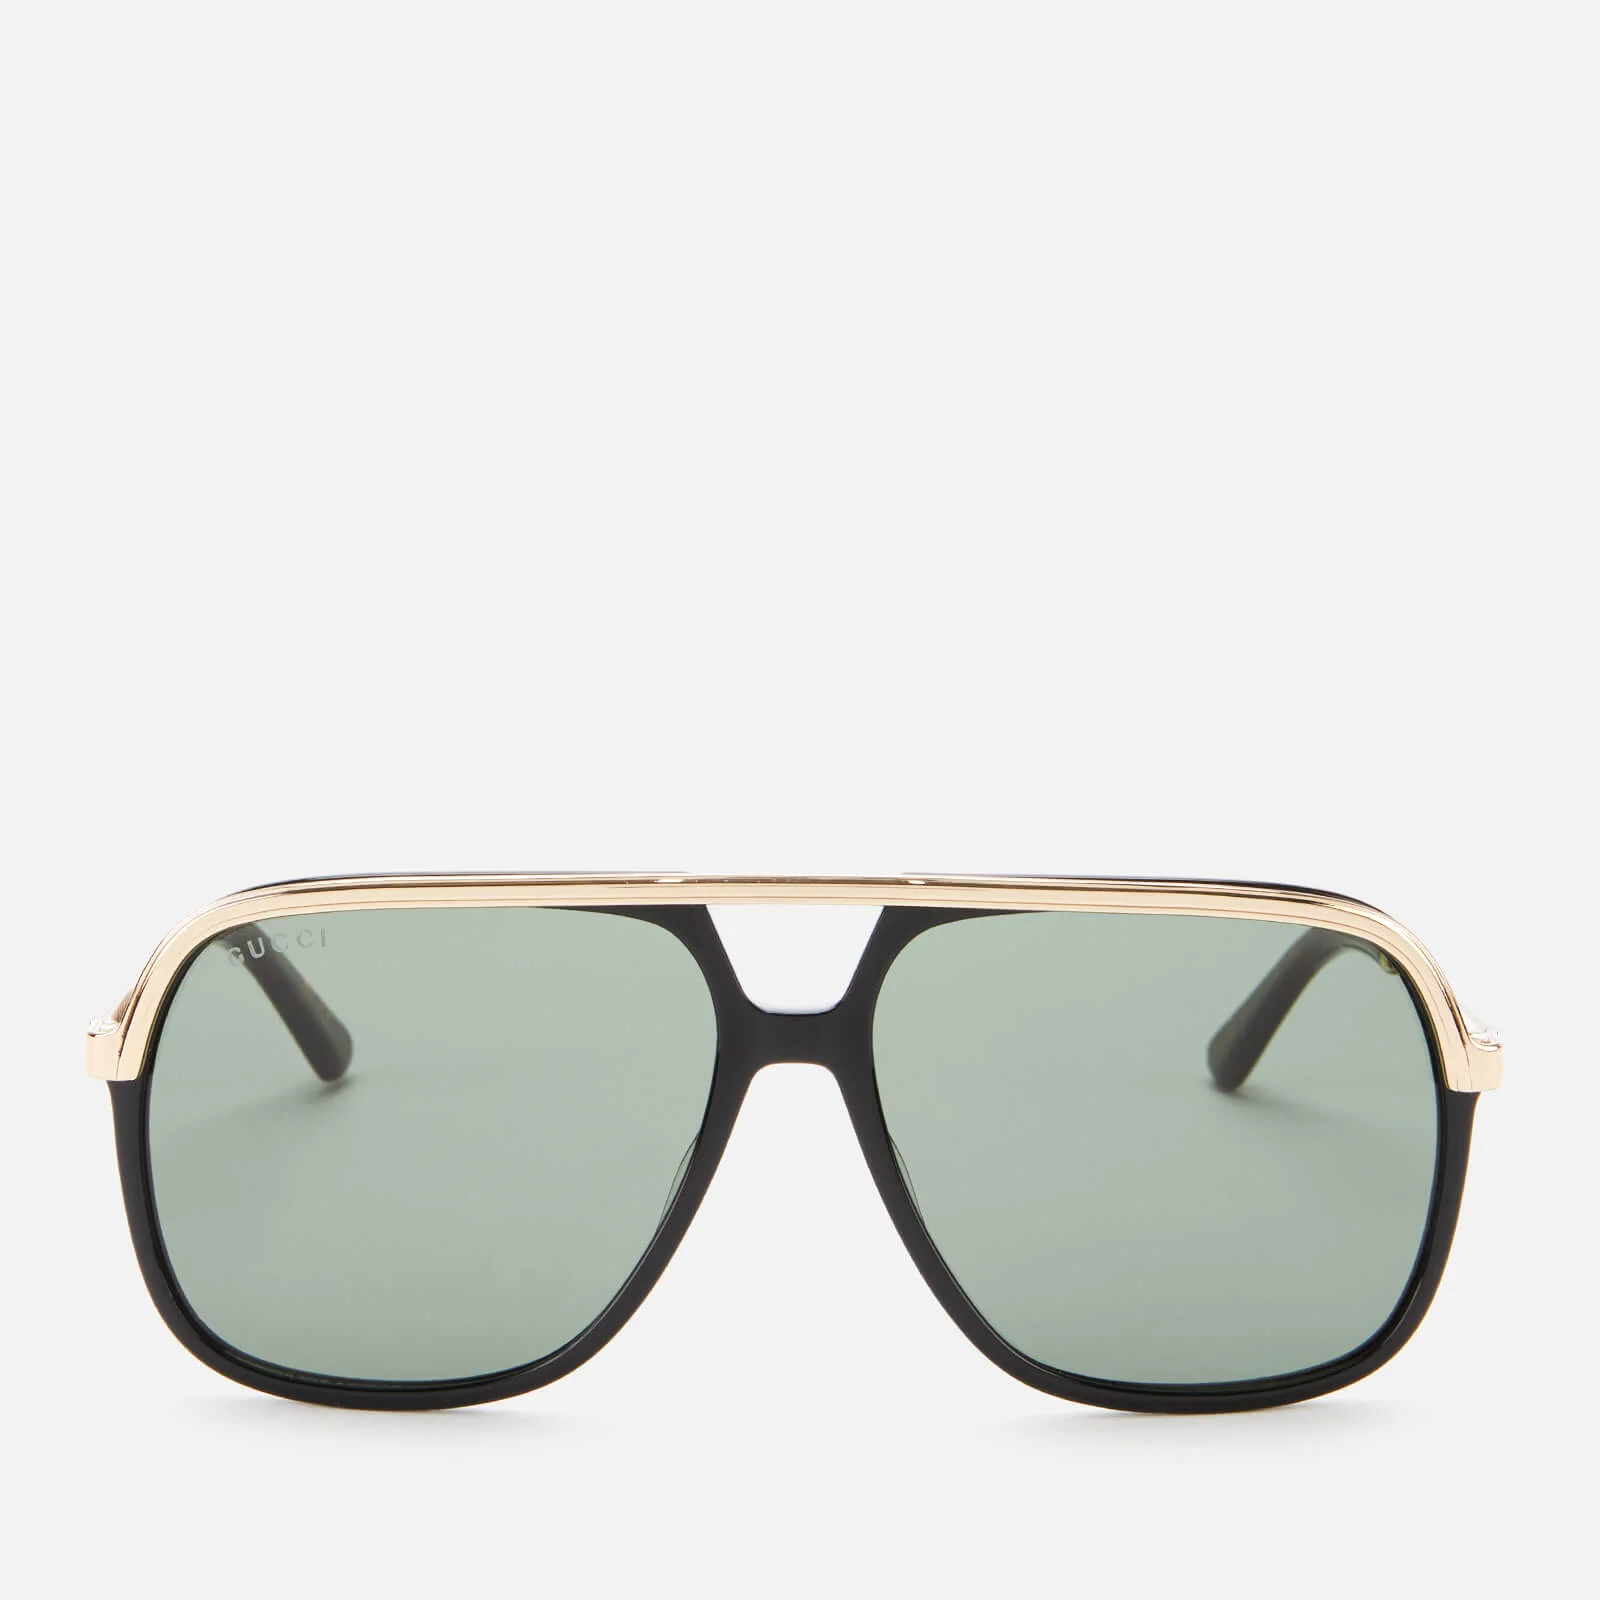 Gucci Men's Aviator Style Sunglasses - Black/Gold/Green Image 1